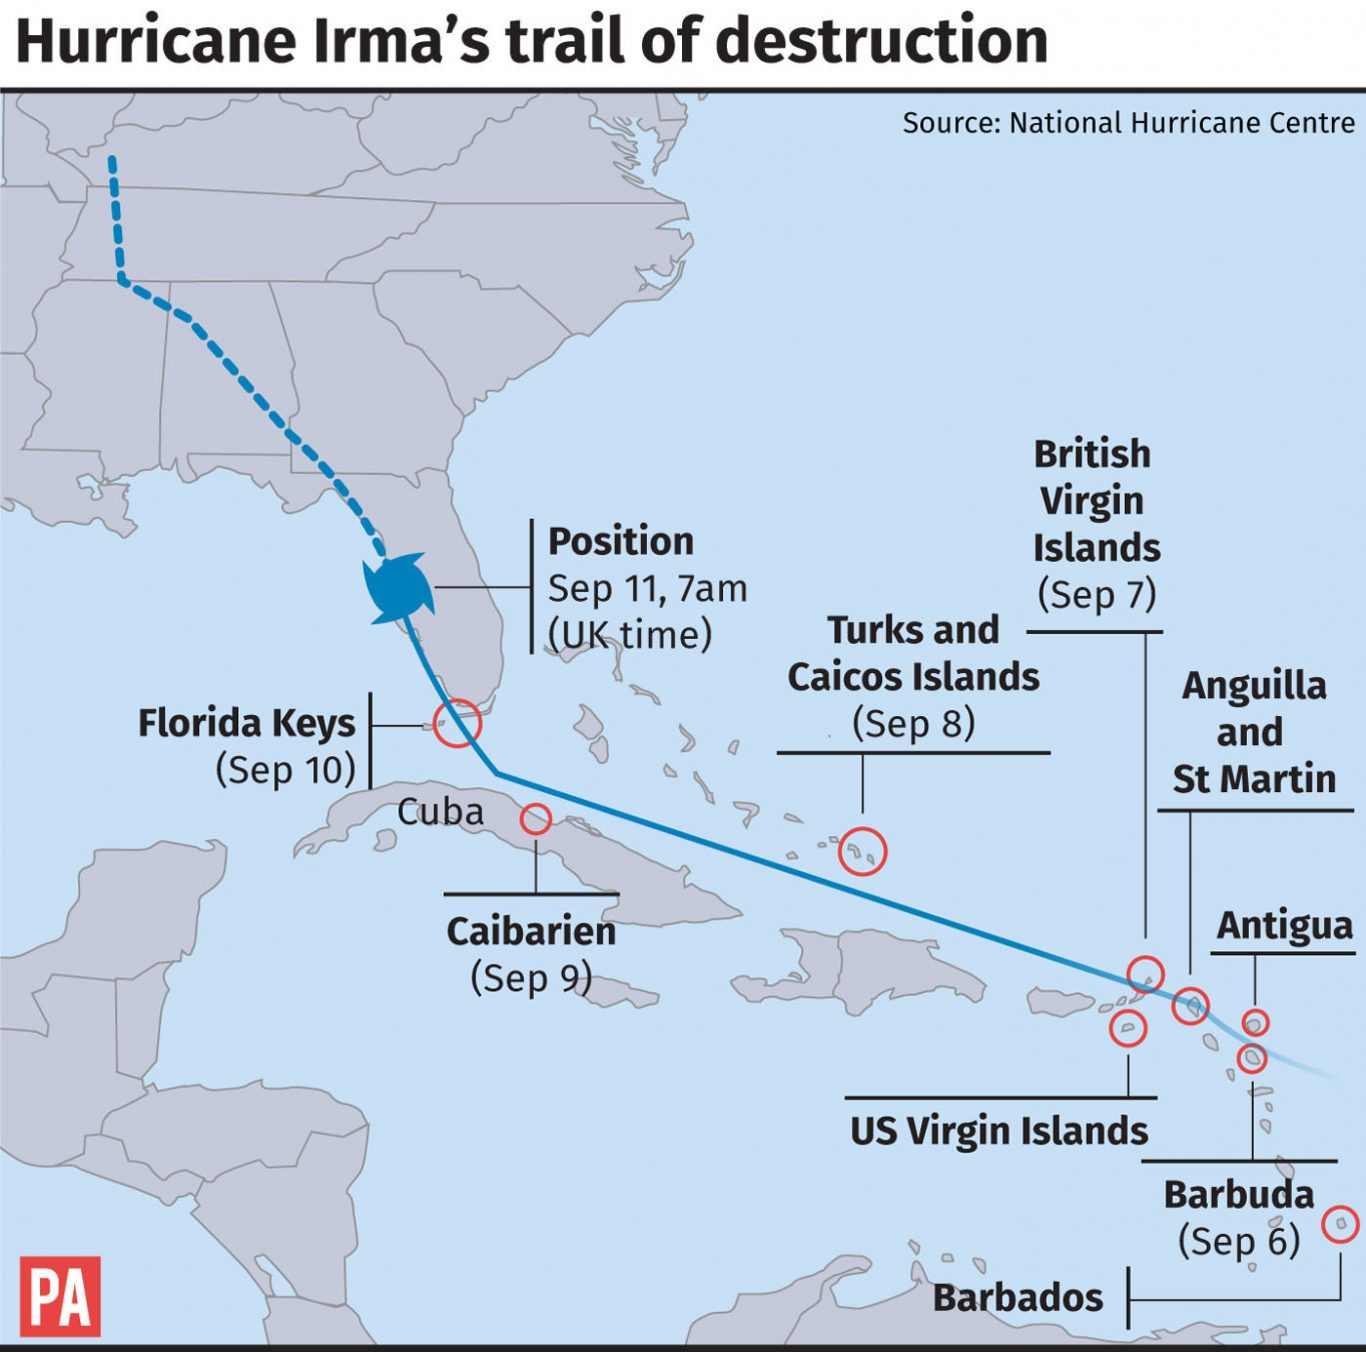 Hurricane Irma's trail of destruction